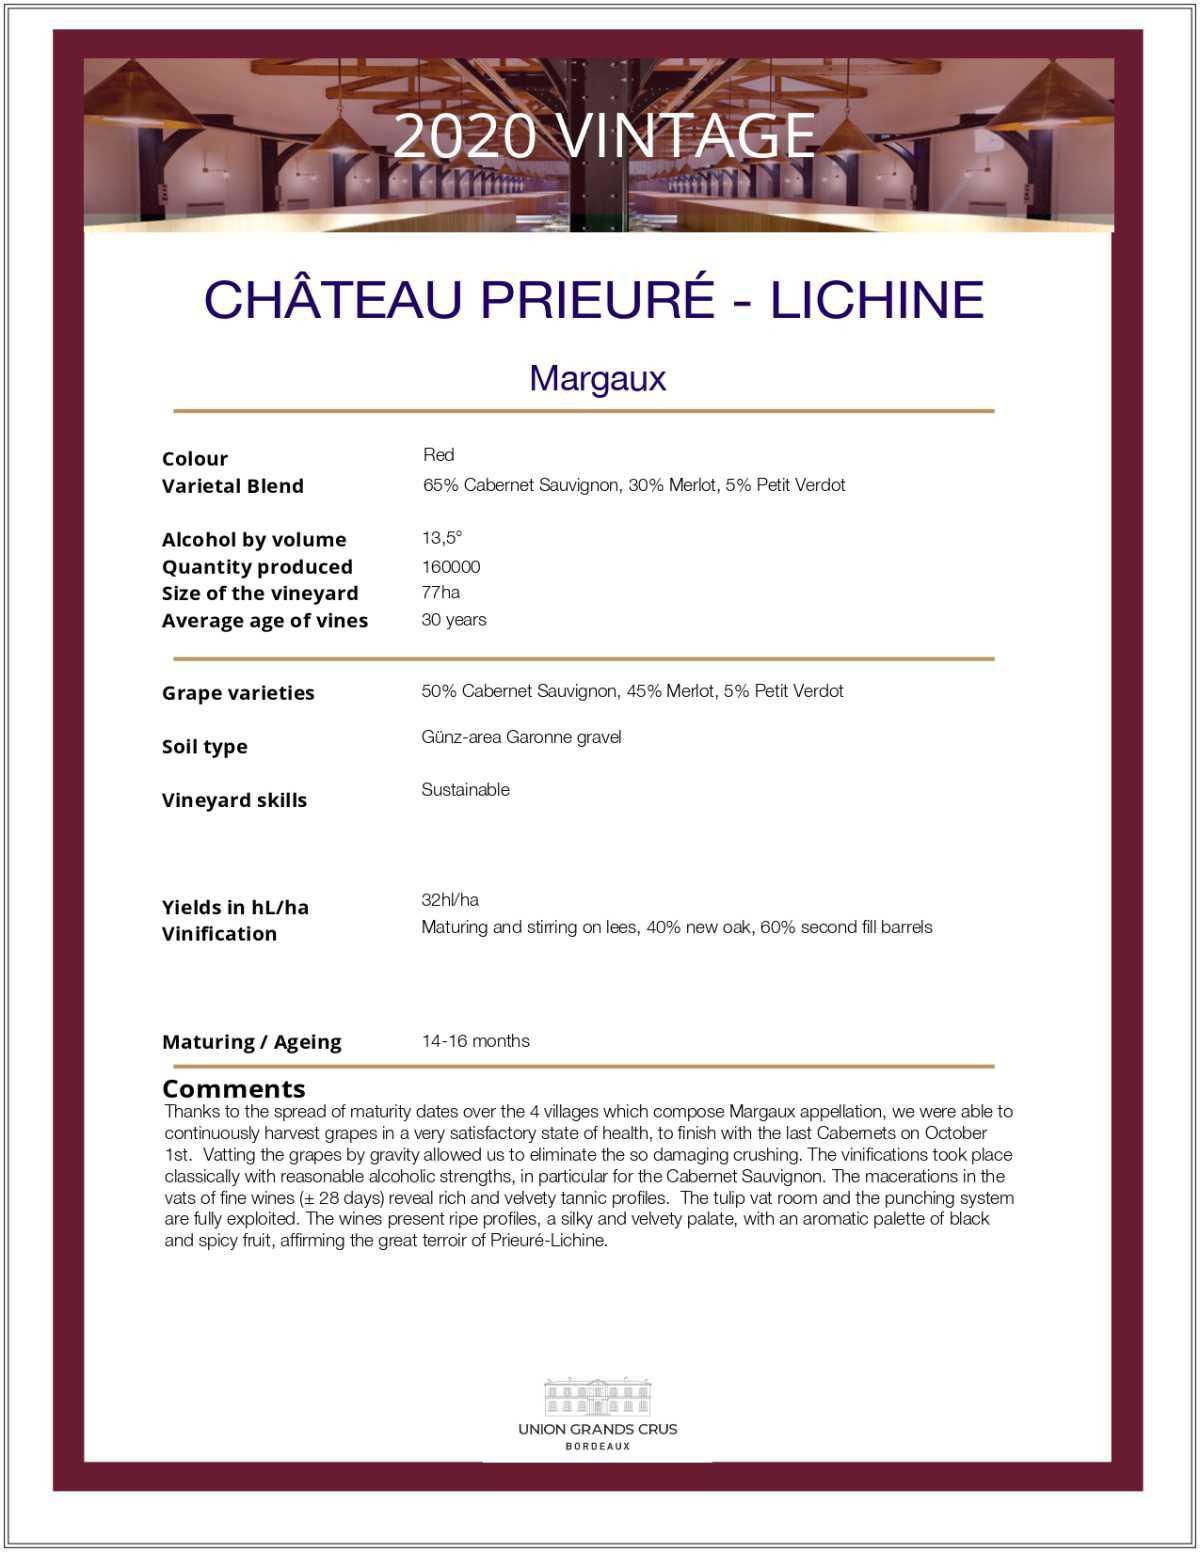 Château Prieuré - Lichine